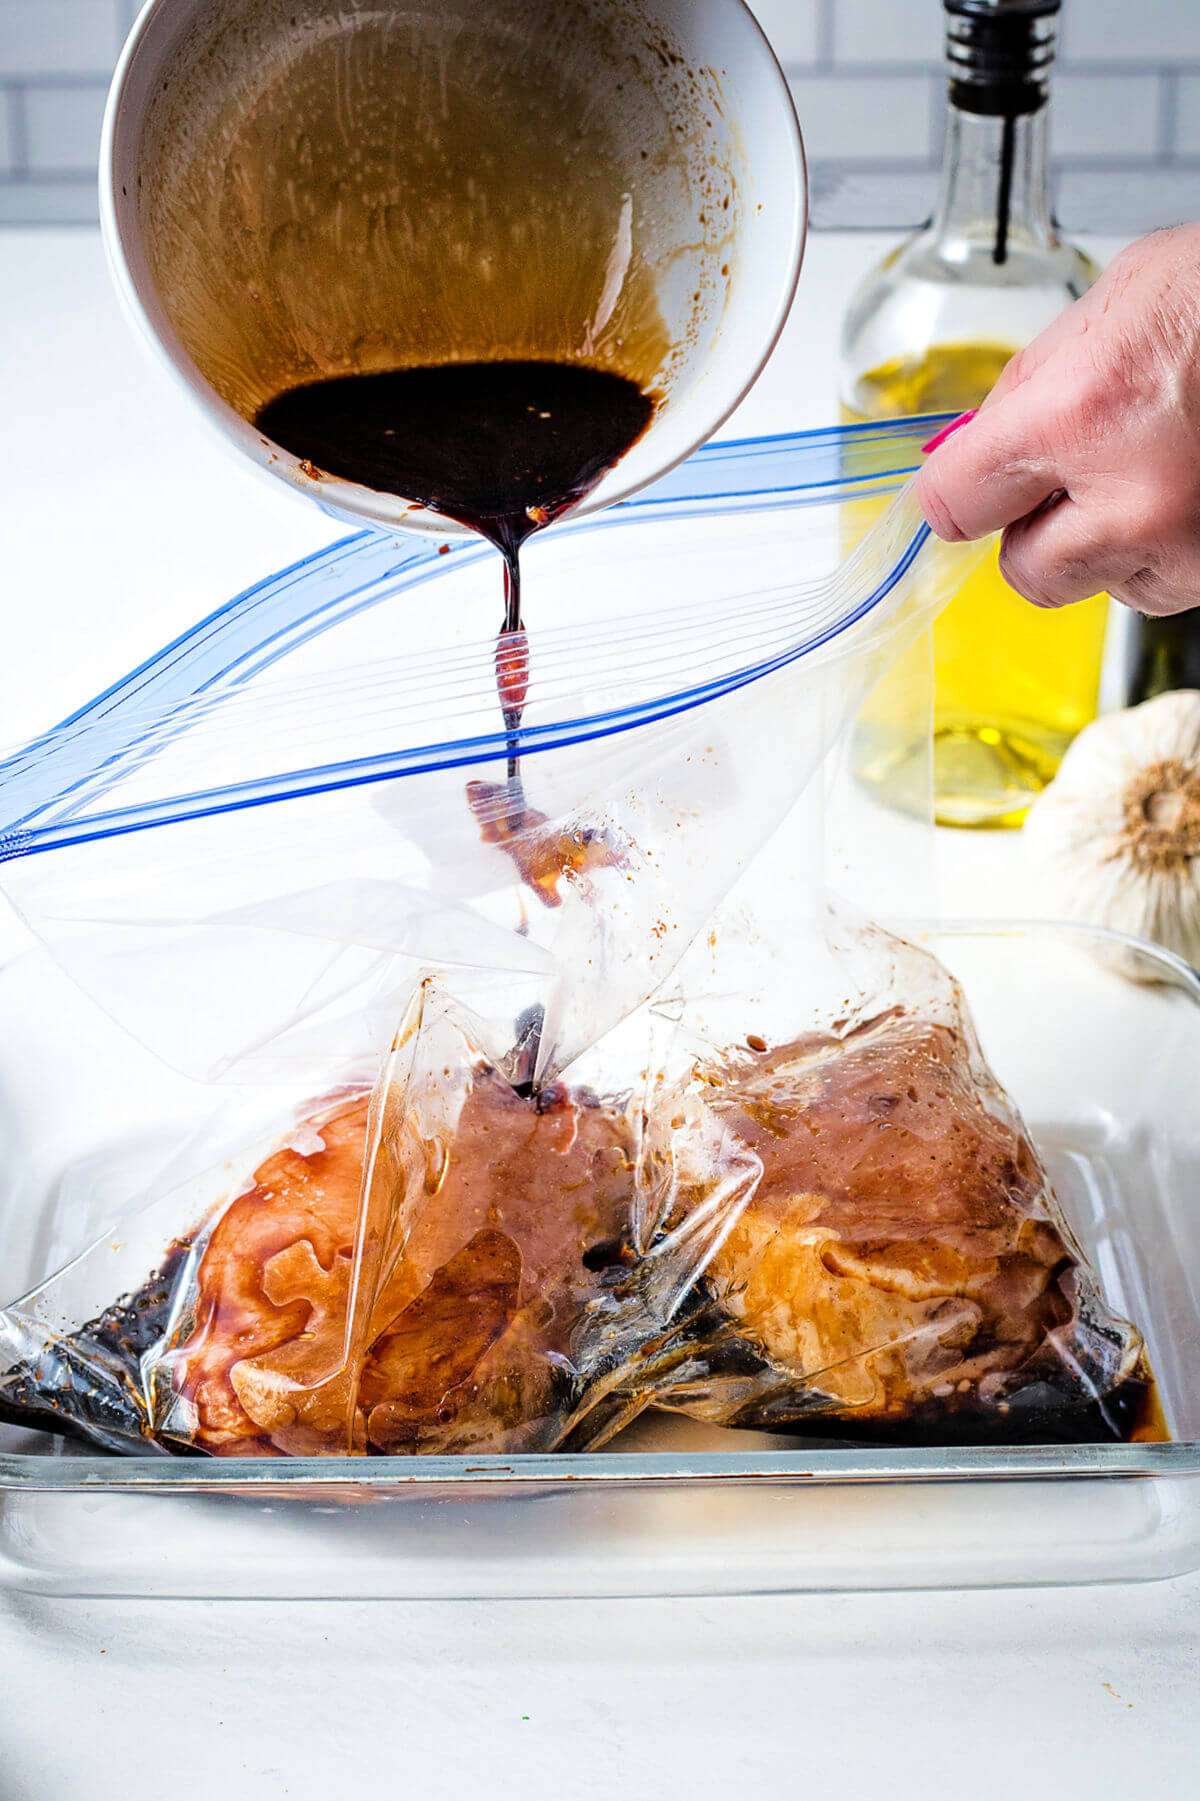 pouring pork chop marinade into a gallon size ziplock bag with pork chops inside.